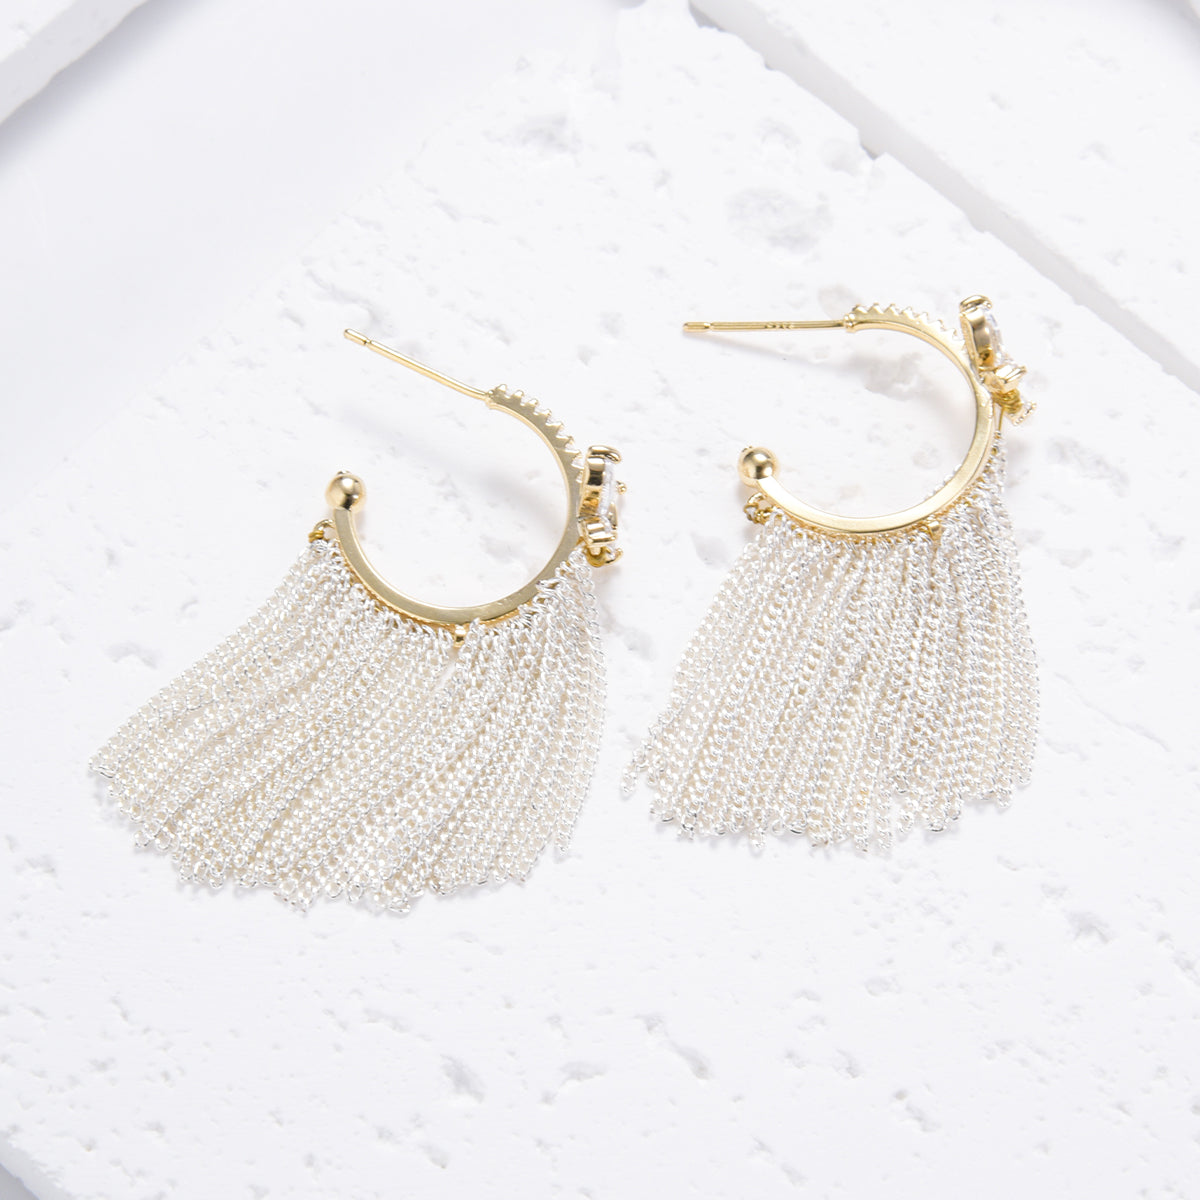 Classic golden butterfly earrings with silver tassels